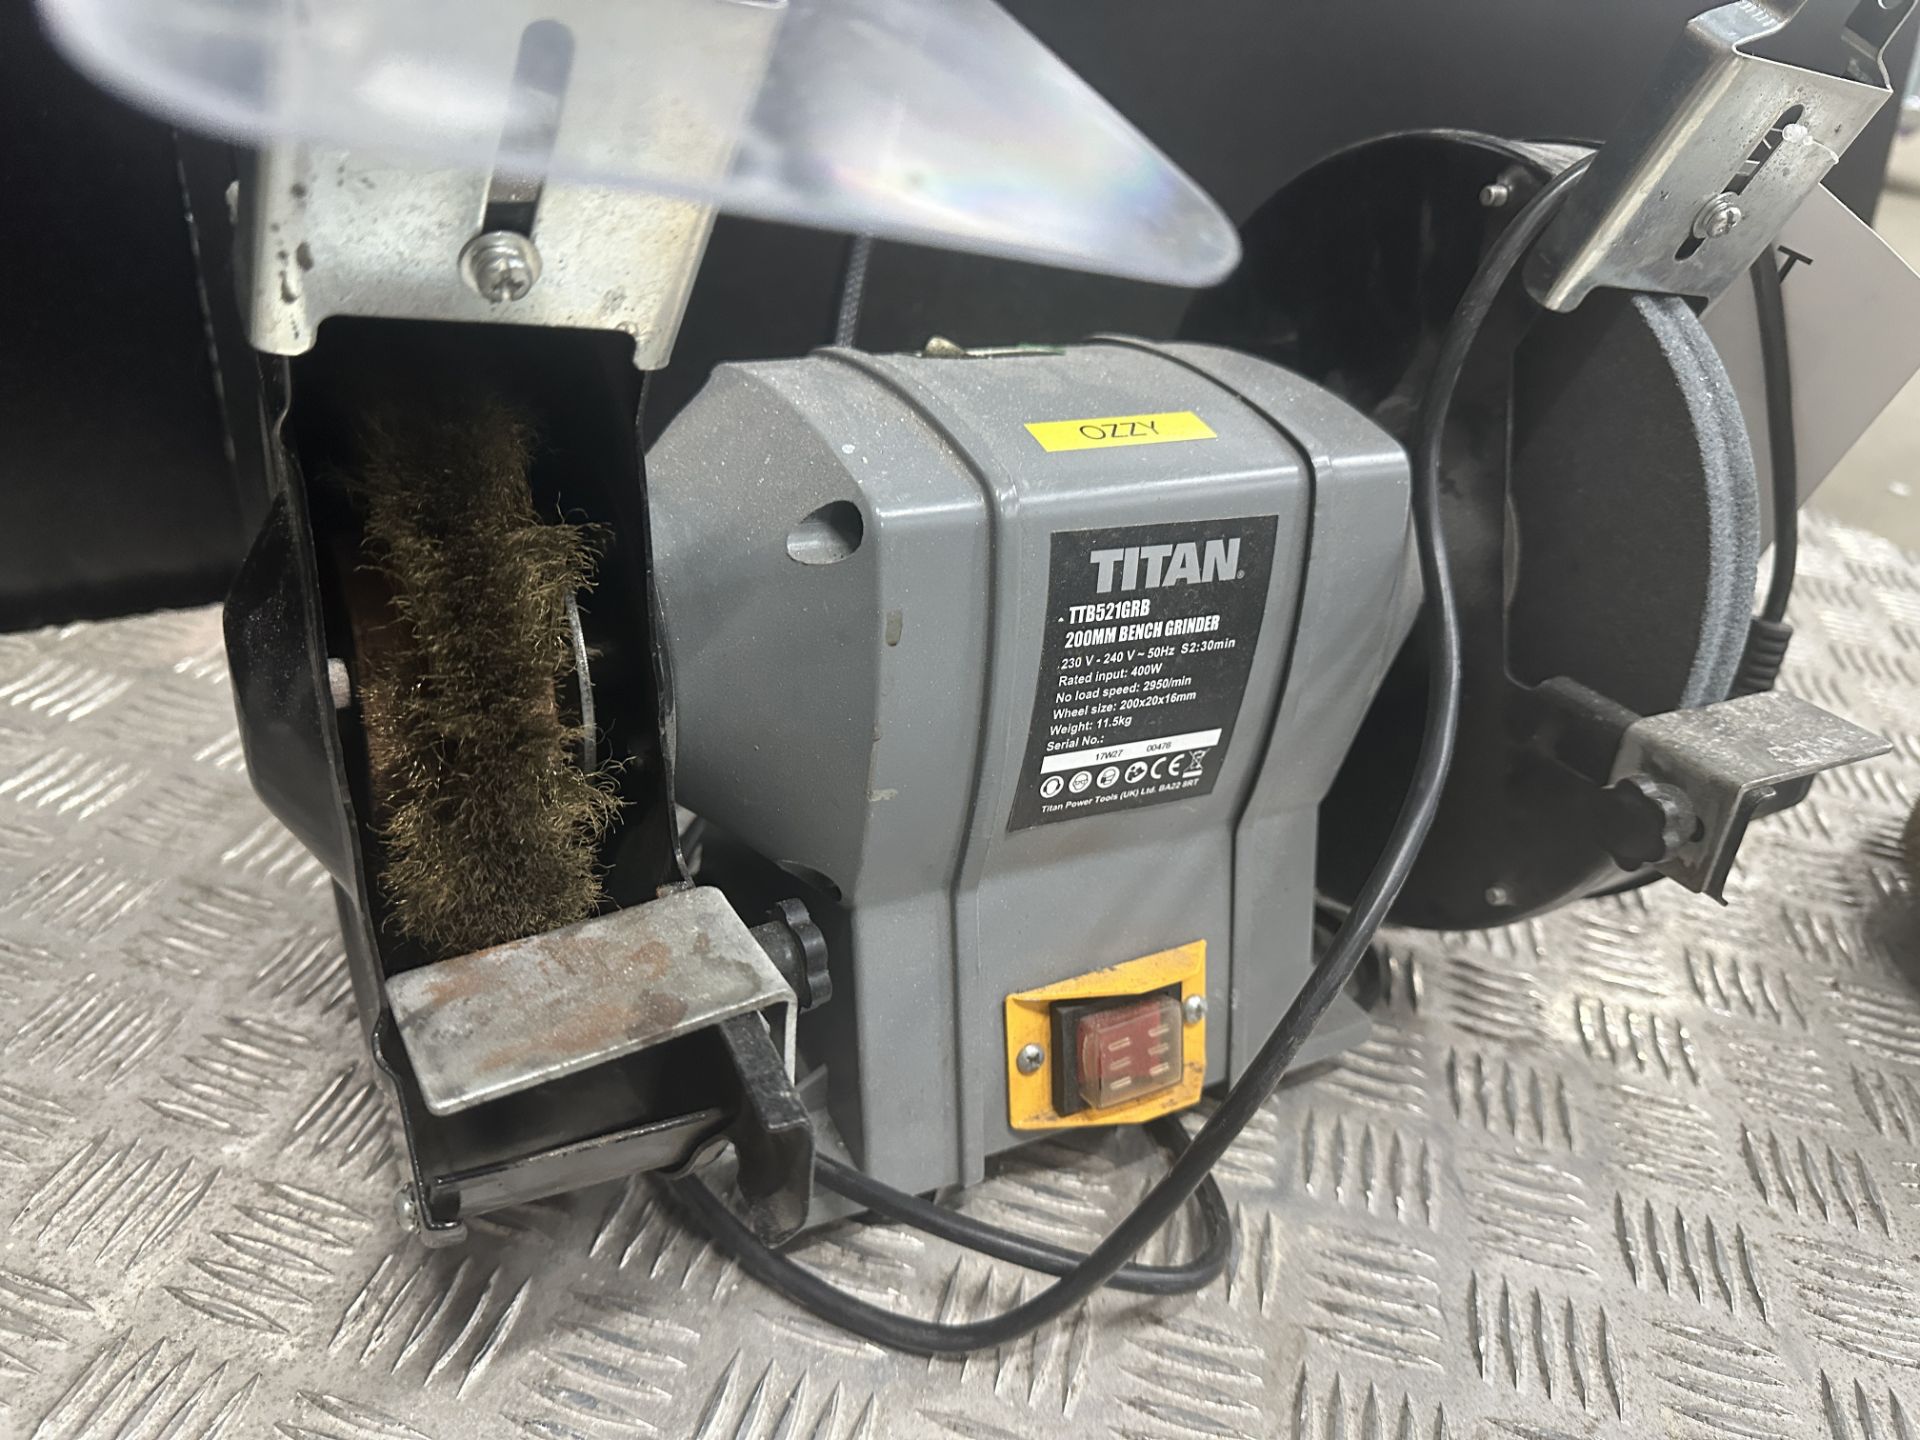 Titan TTB521GRB 200mm bench grinder - Image 4 of 4